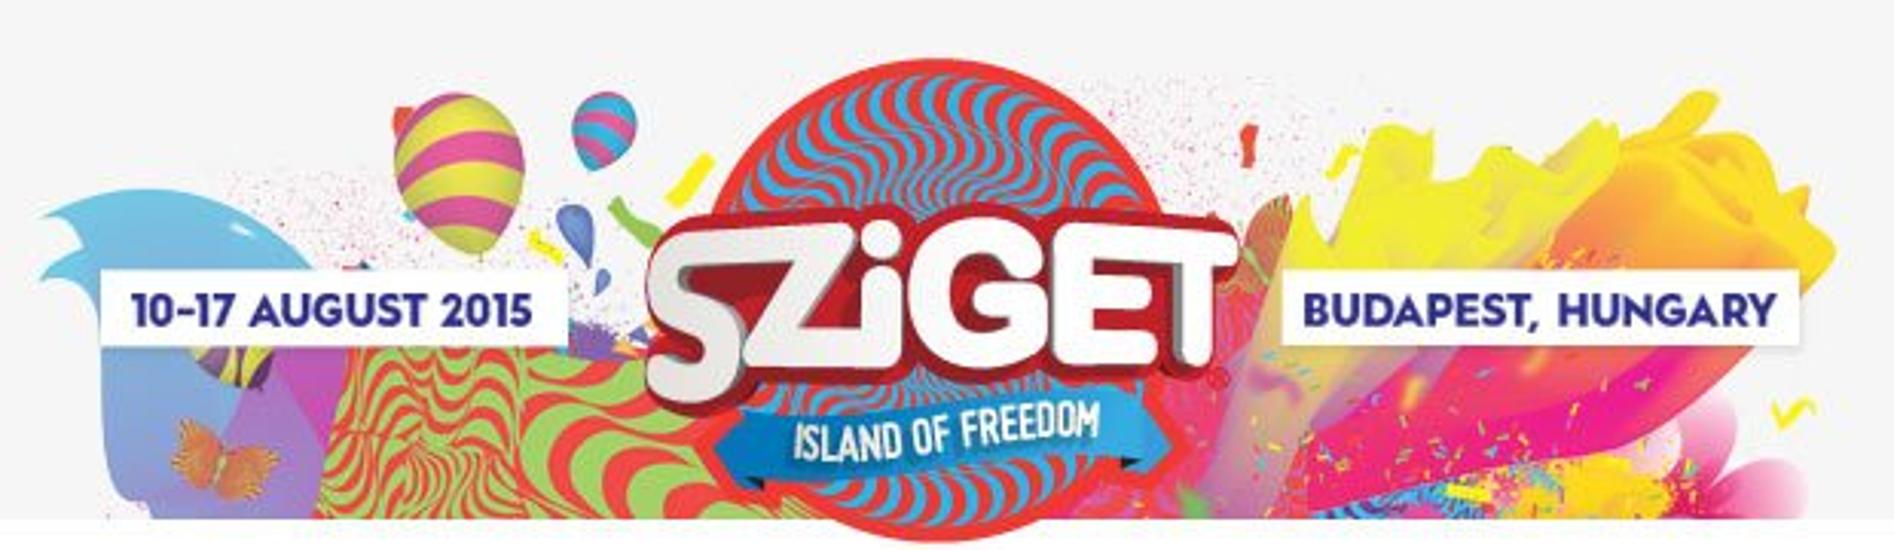 441 000 Szitizens @ Sziget Festival Budapest 2015